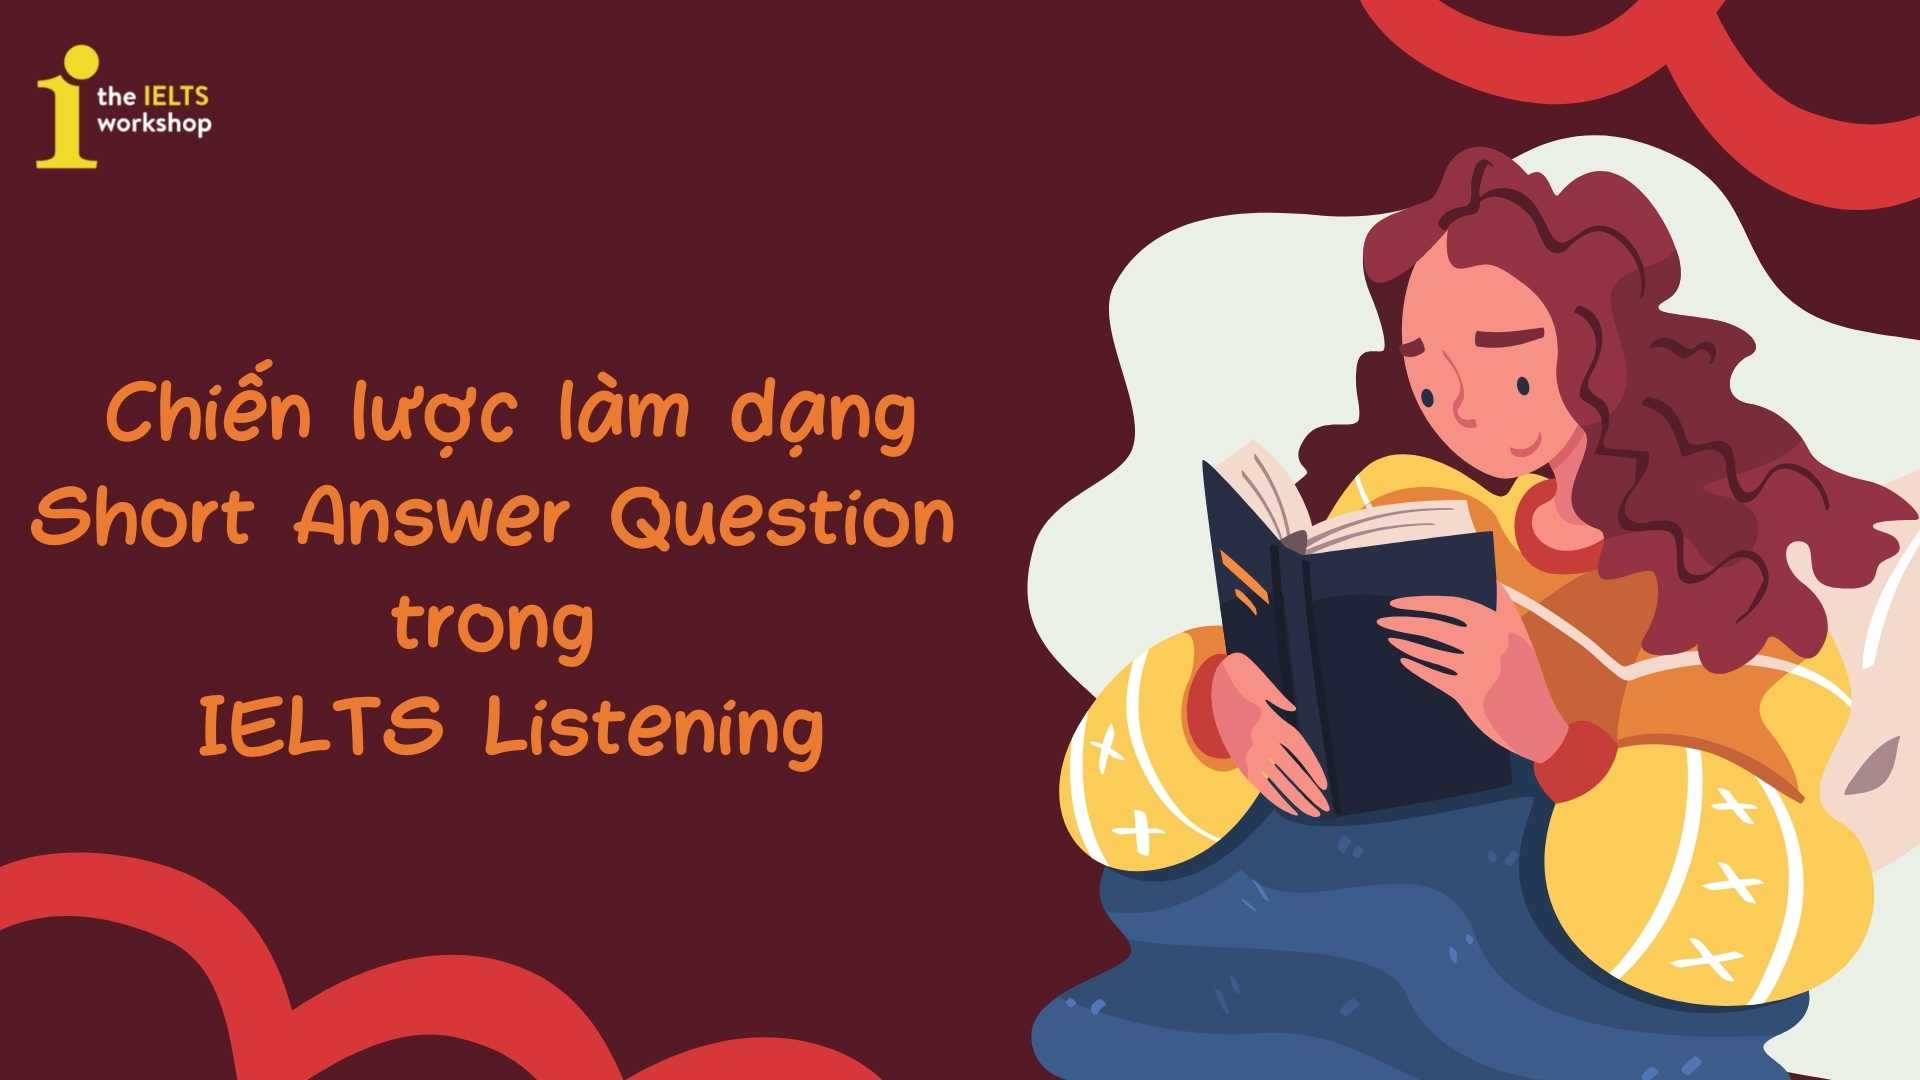 short answer question trong IELTS Listening